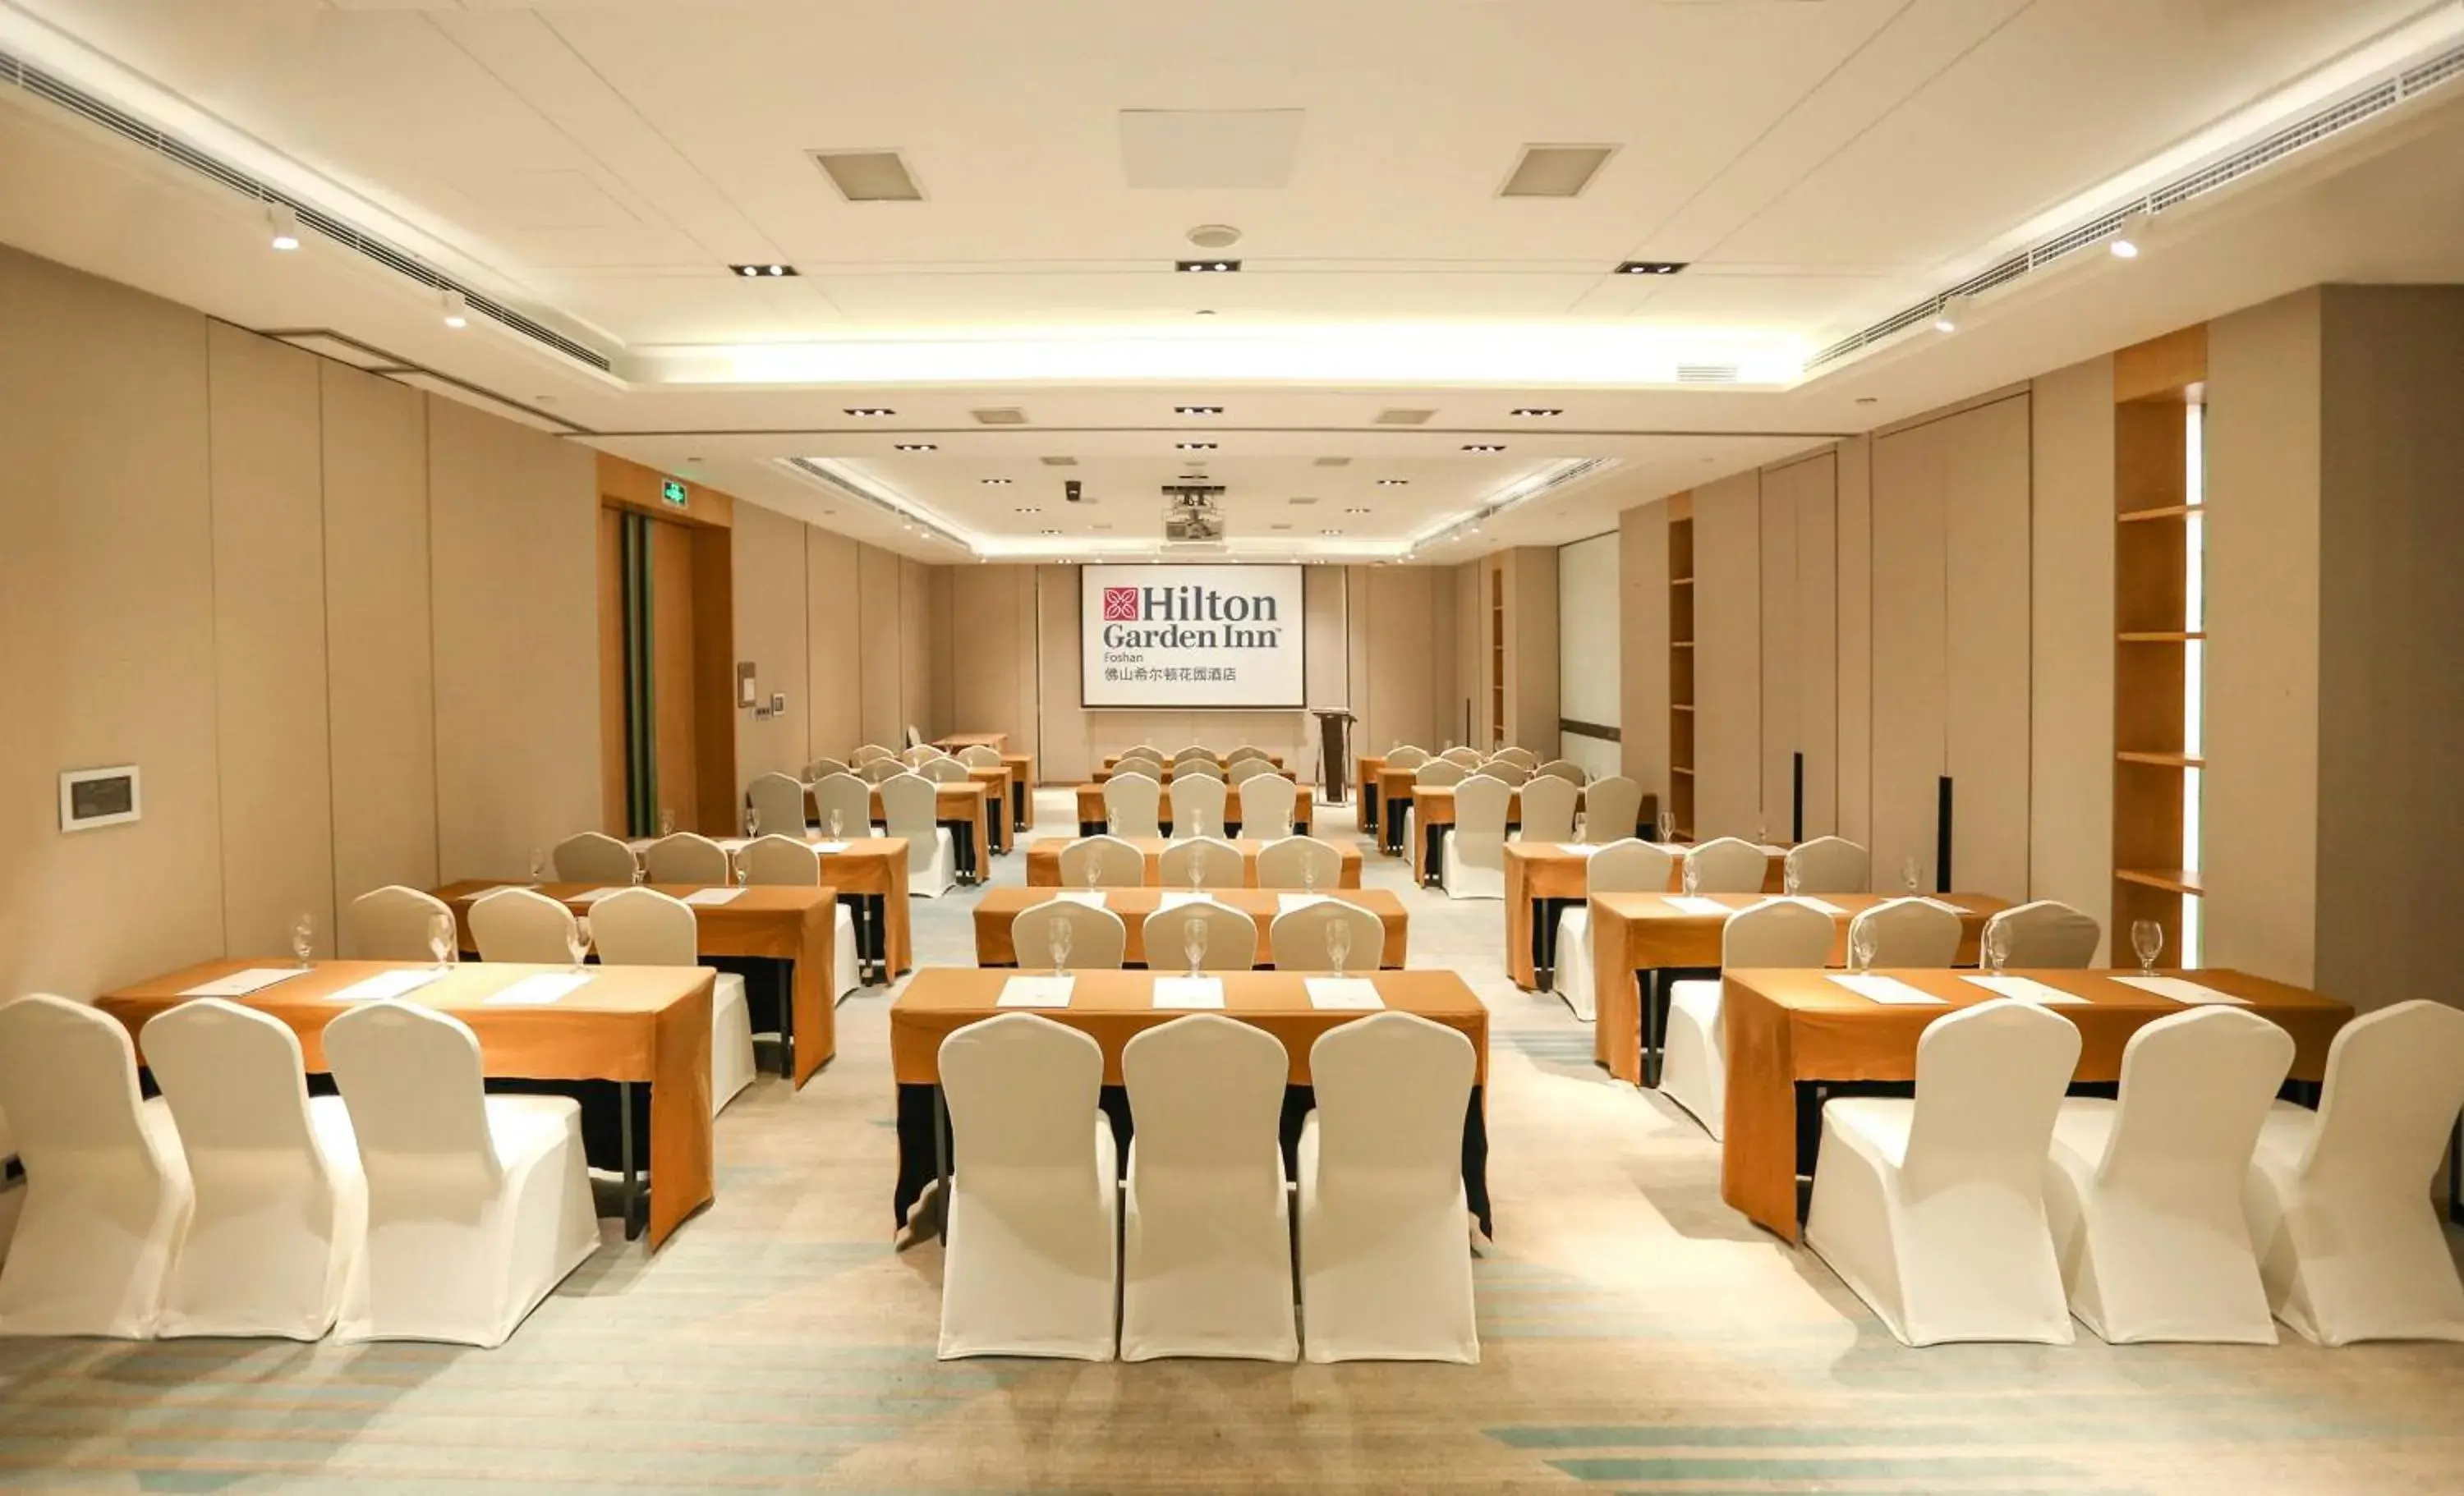 Meeting/conference room in Hilton Garden Inn Foshan